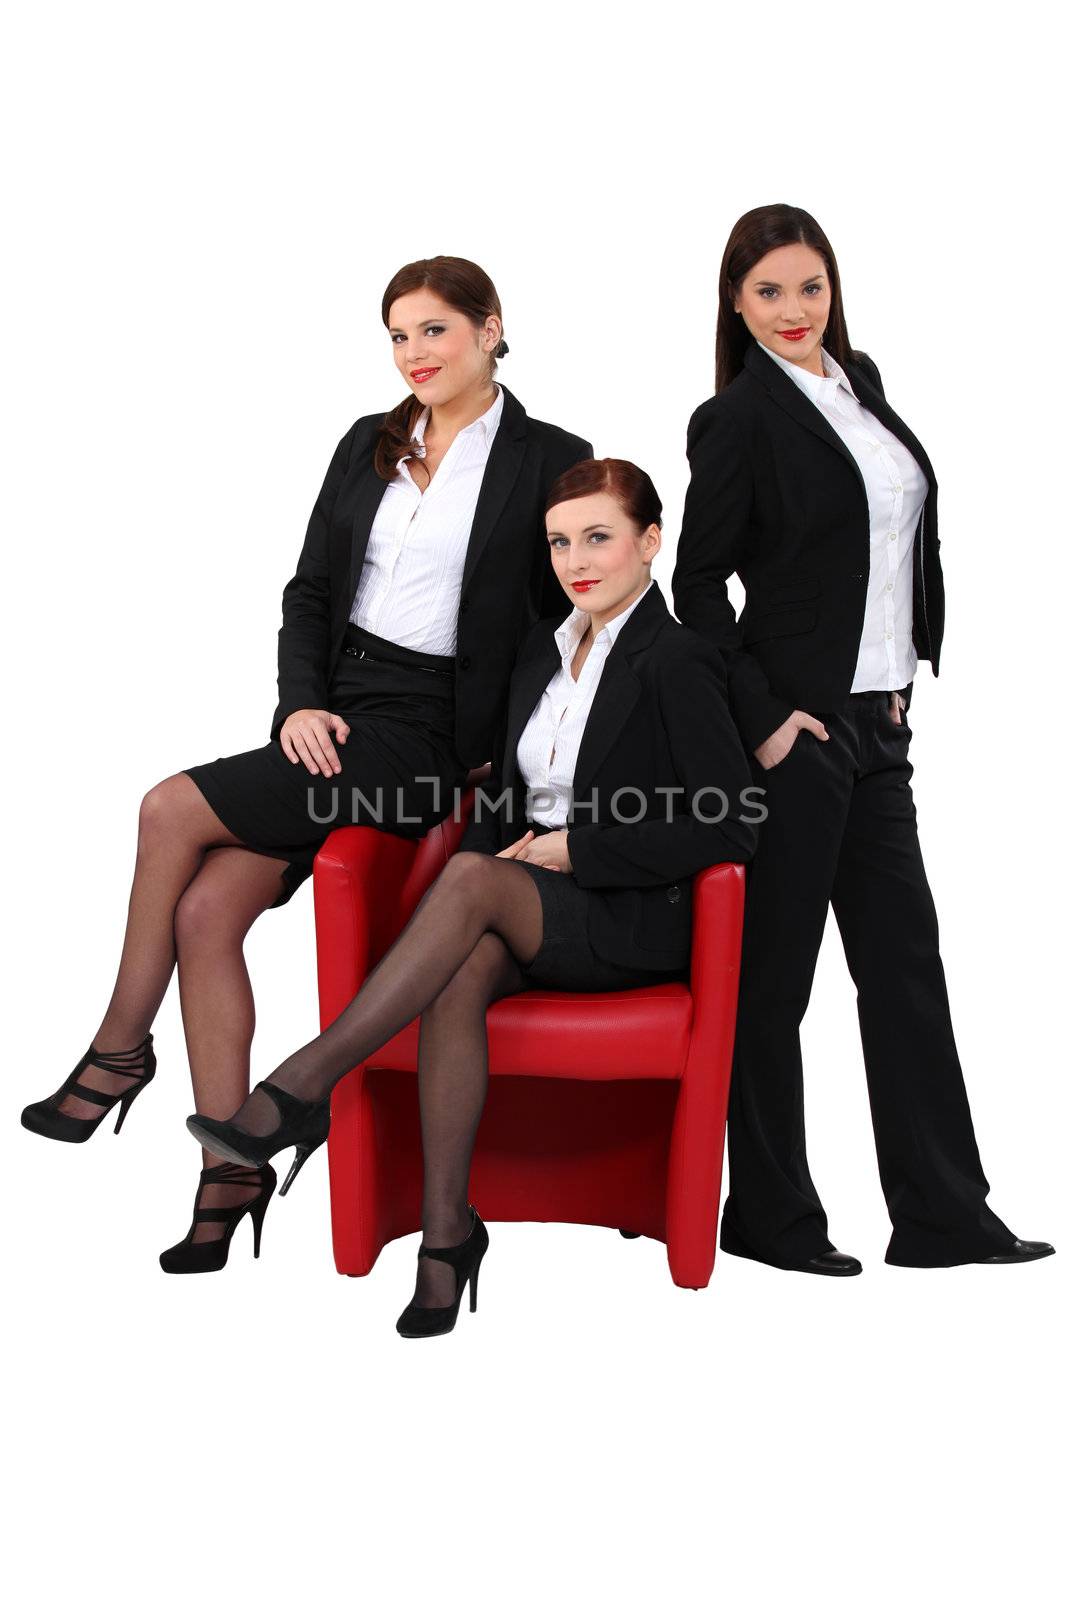 Three elegant women